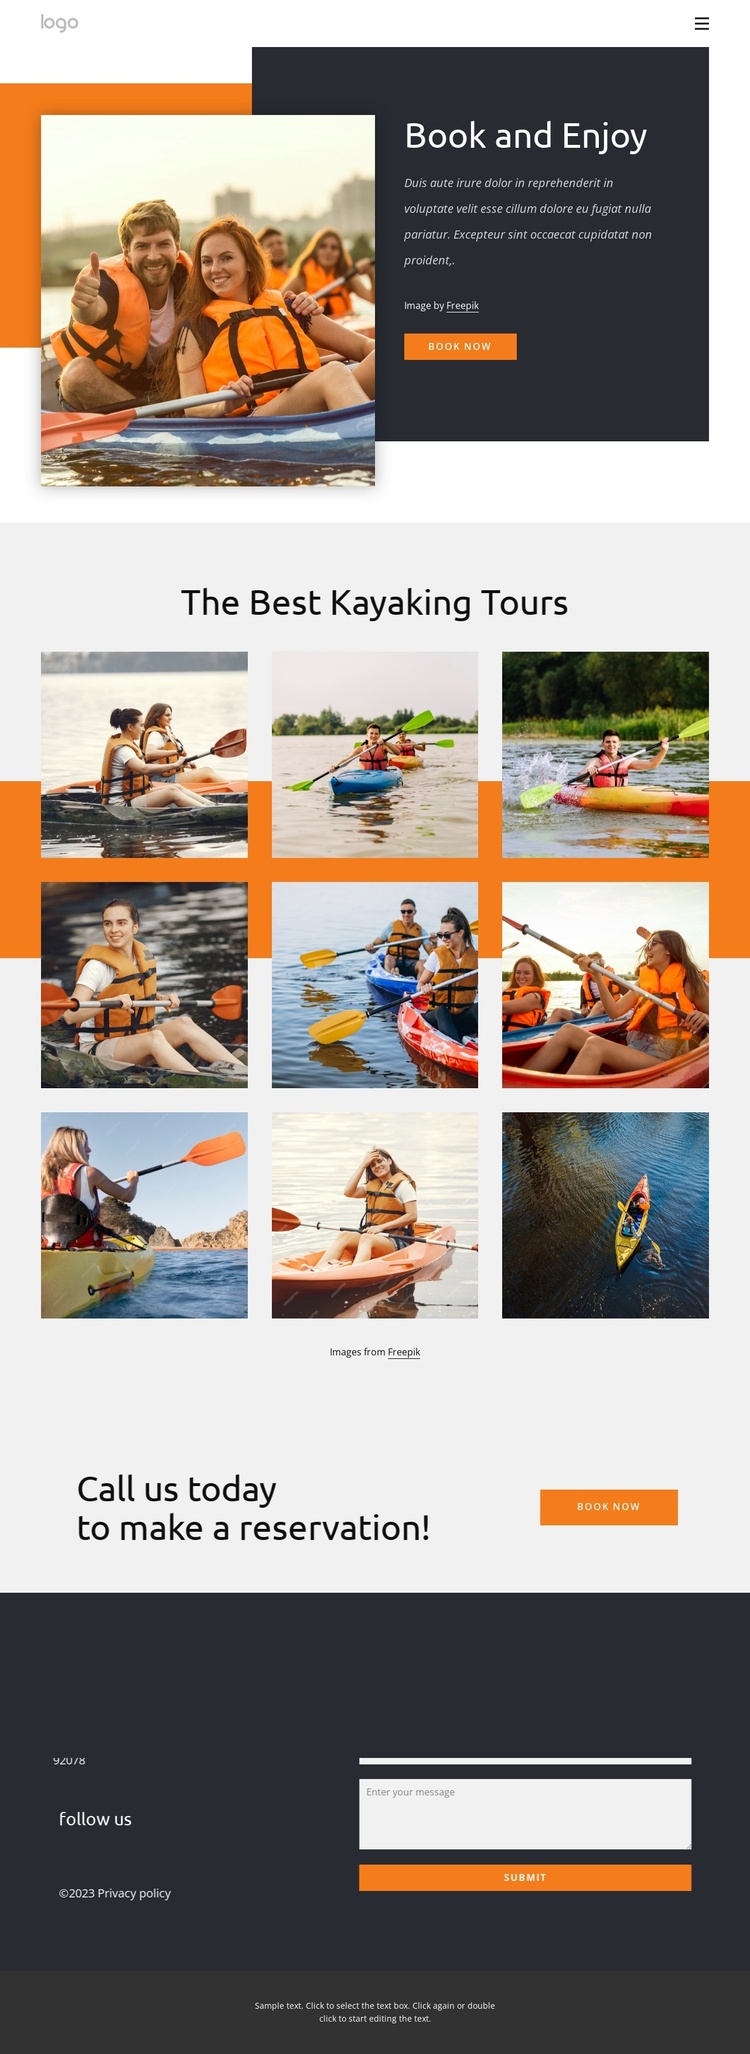 Kayaking tours and holidays Joomla Template